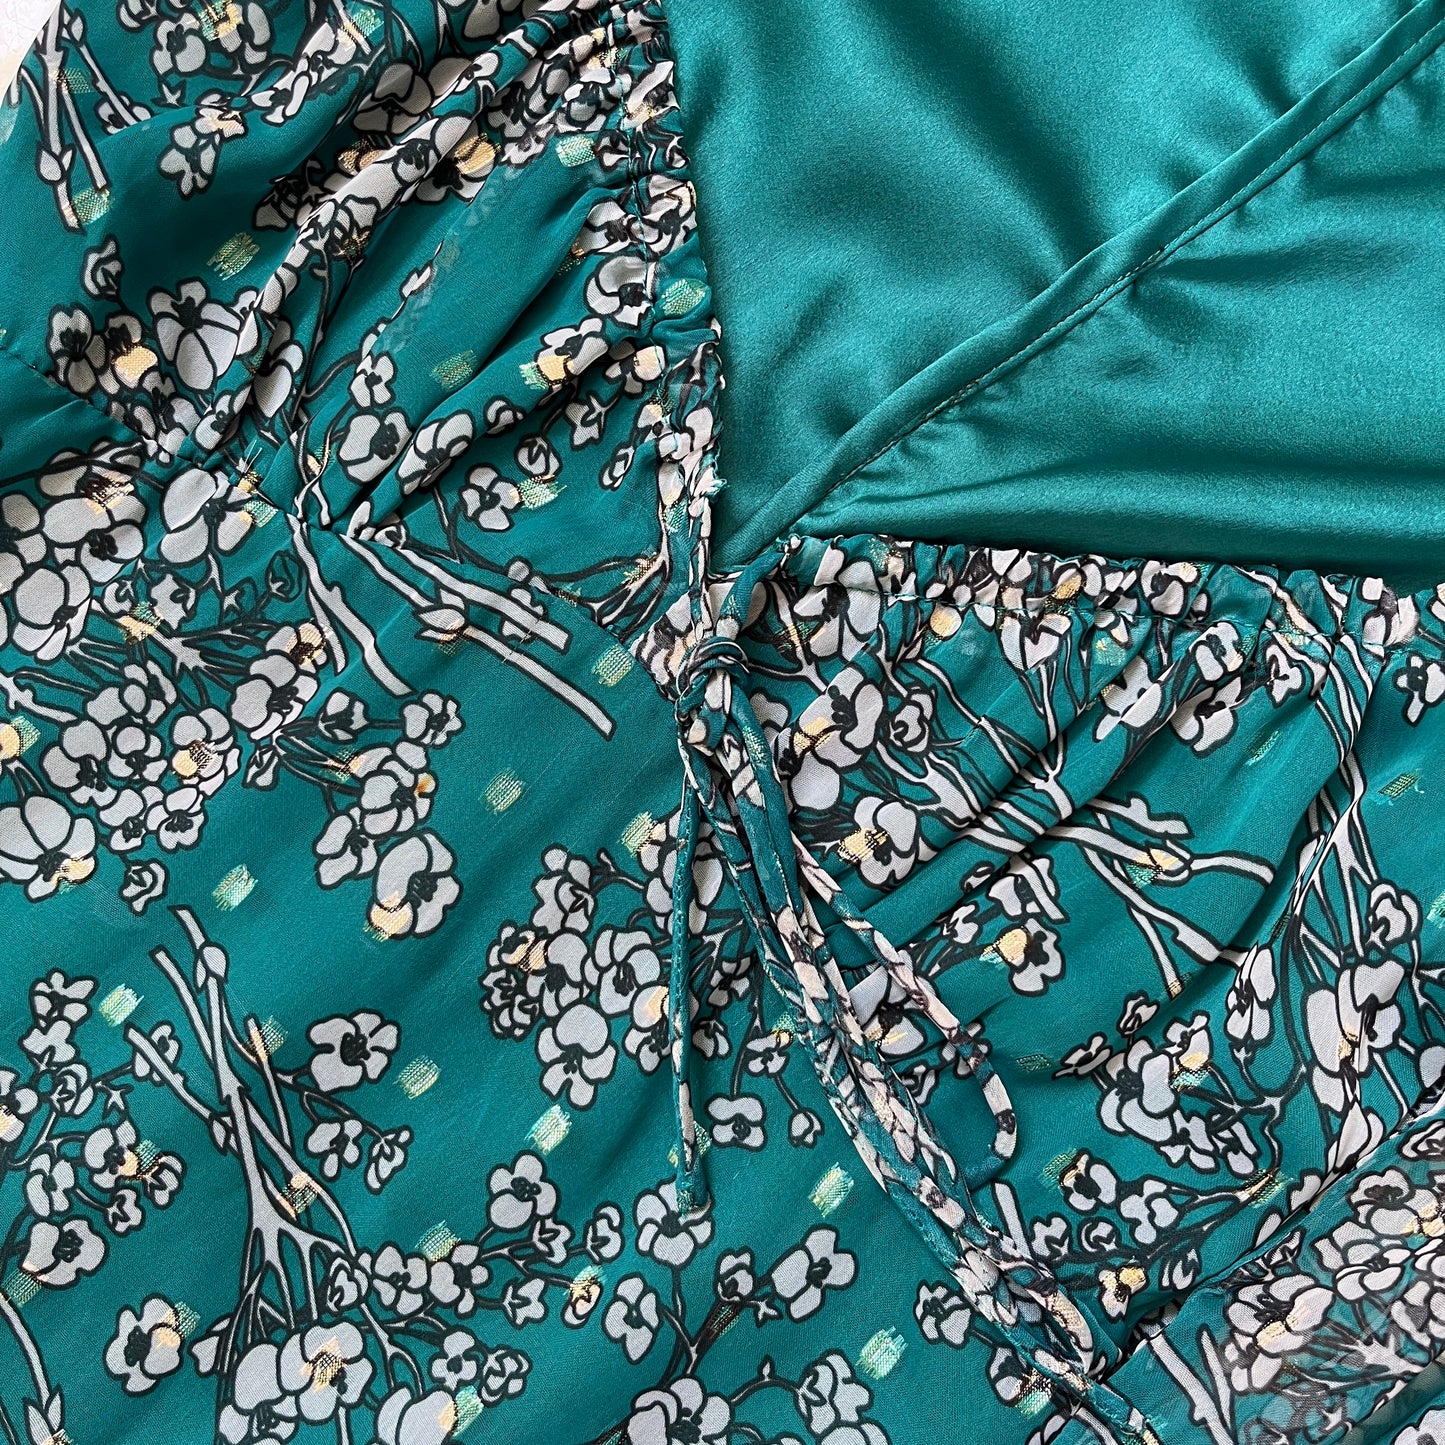 House of Harlow 1960 x REVOLVE Vaida Mini Dress in Teal Floral Multi